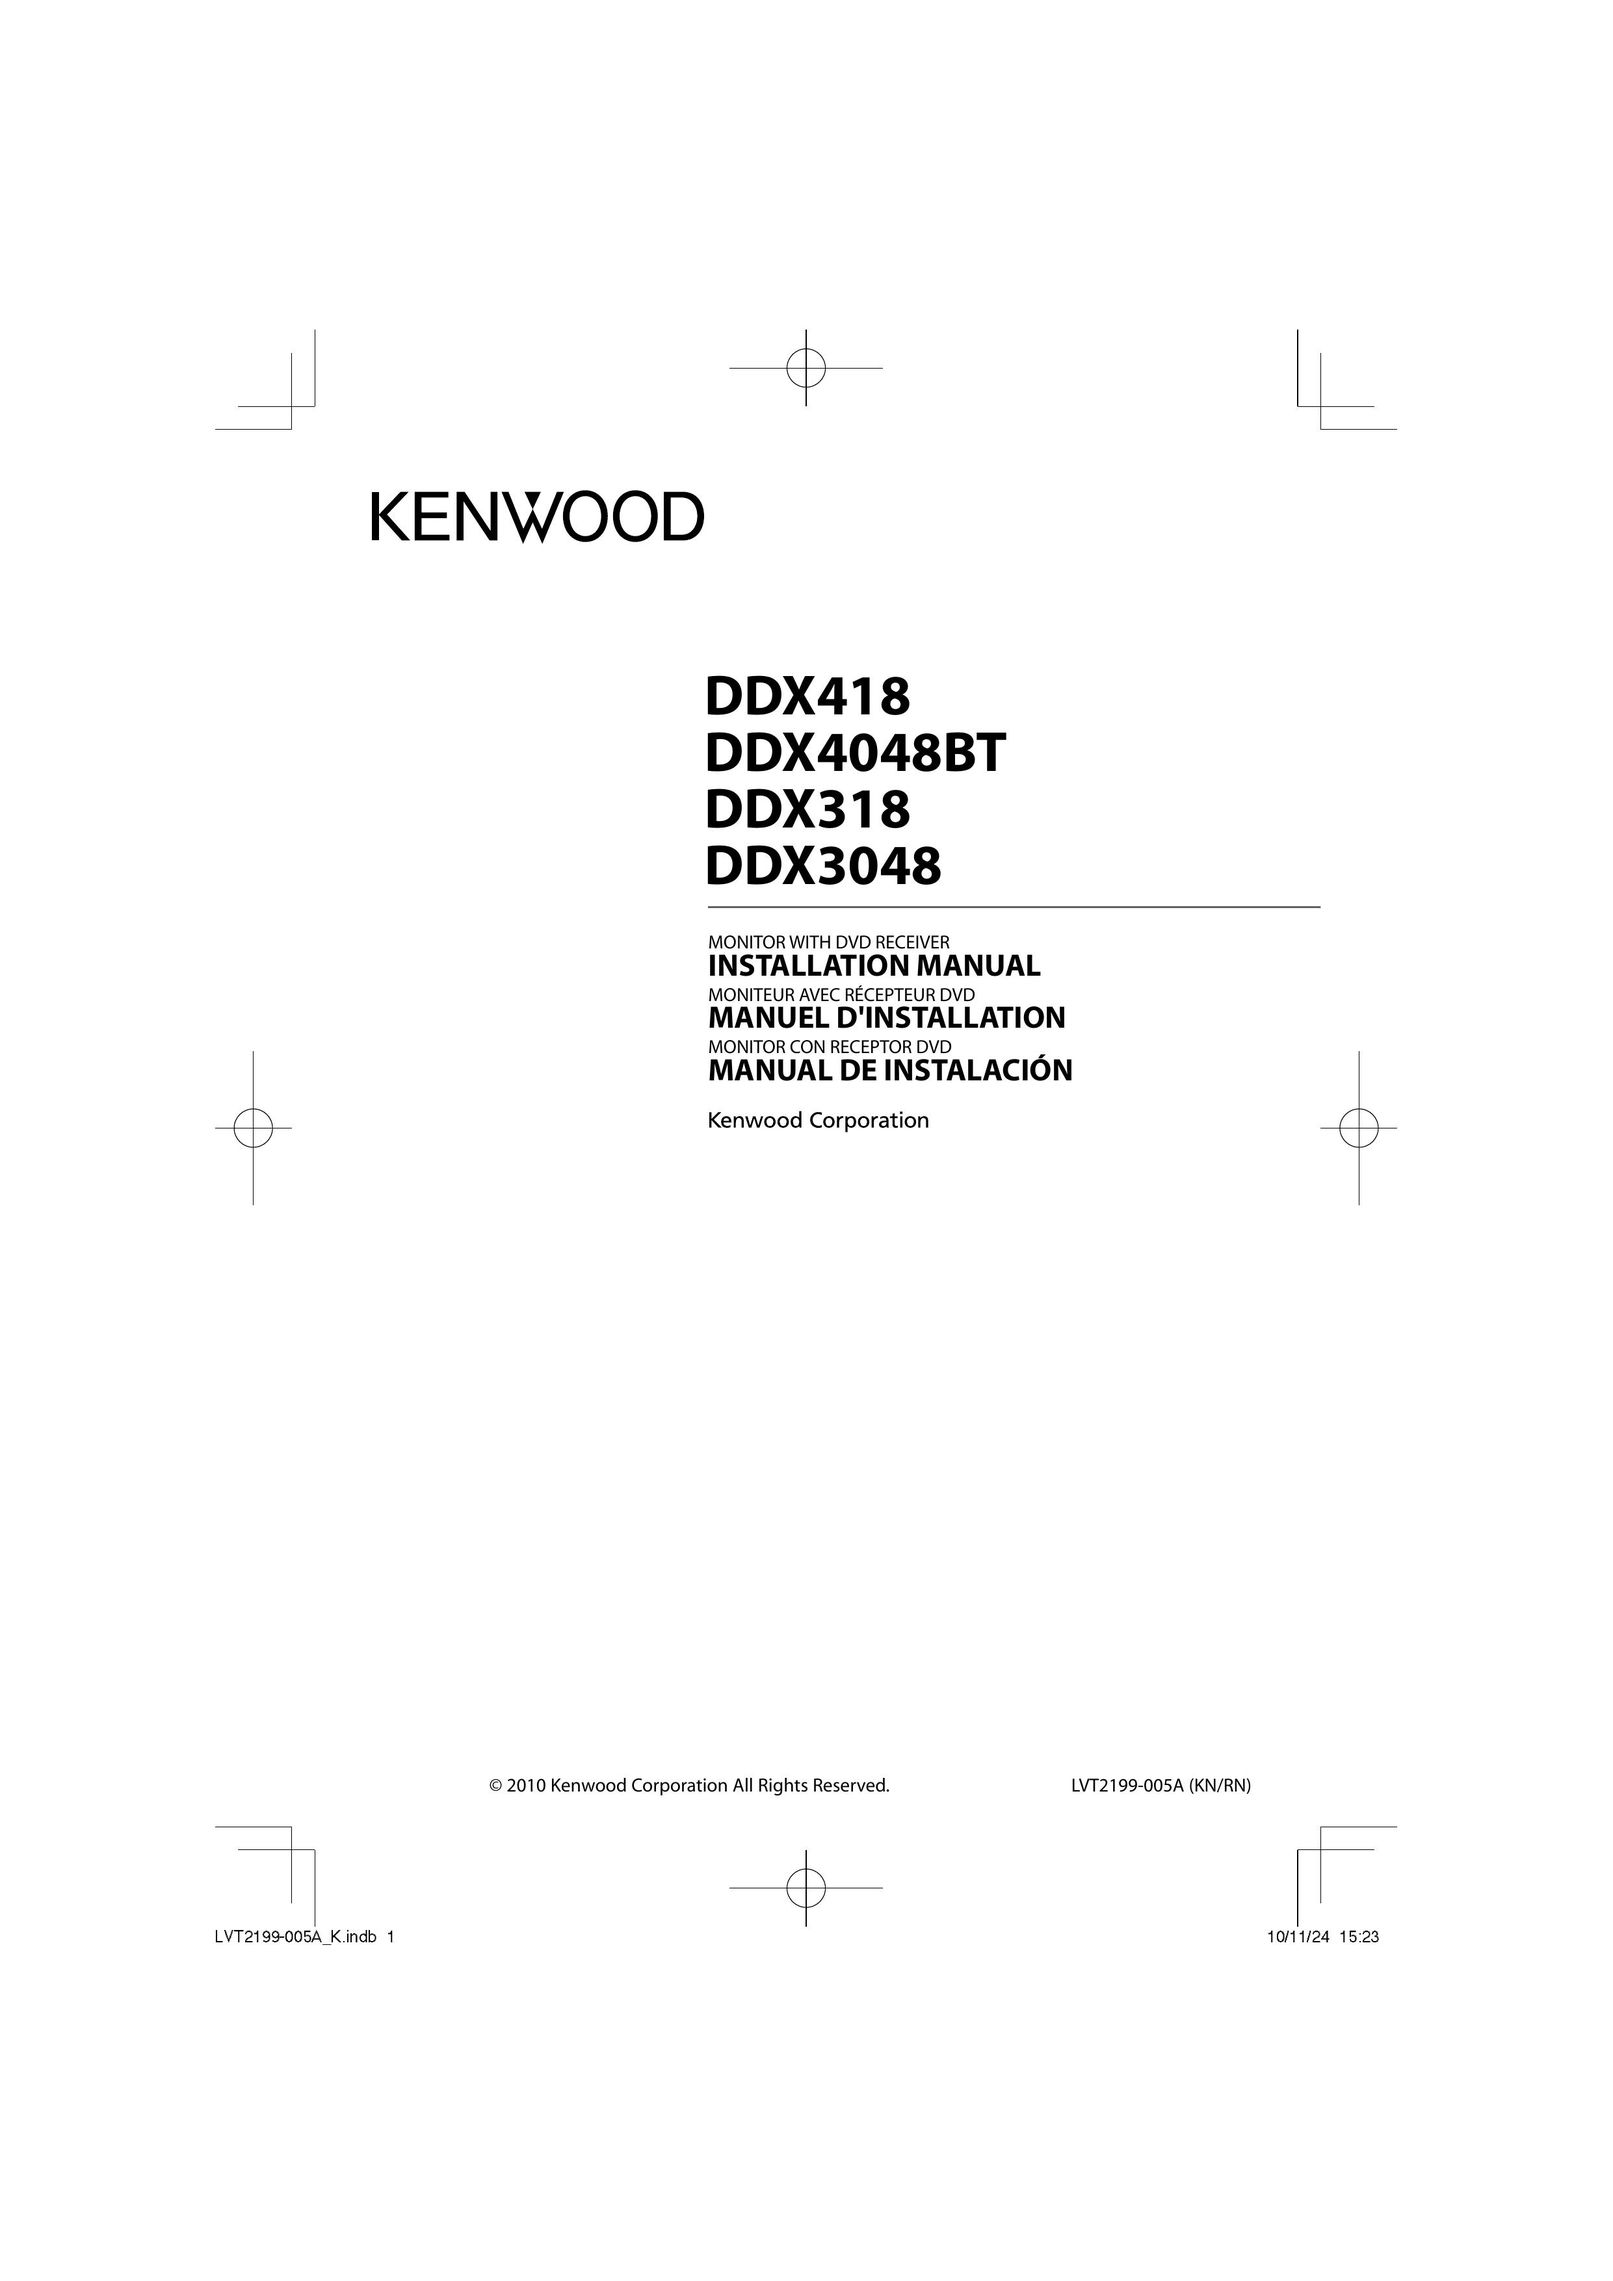 Kenwood DDX418 Car Video System User Manual